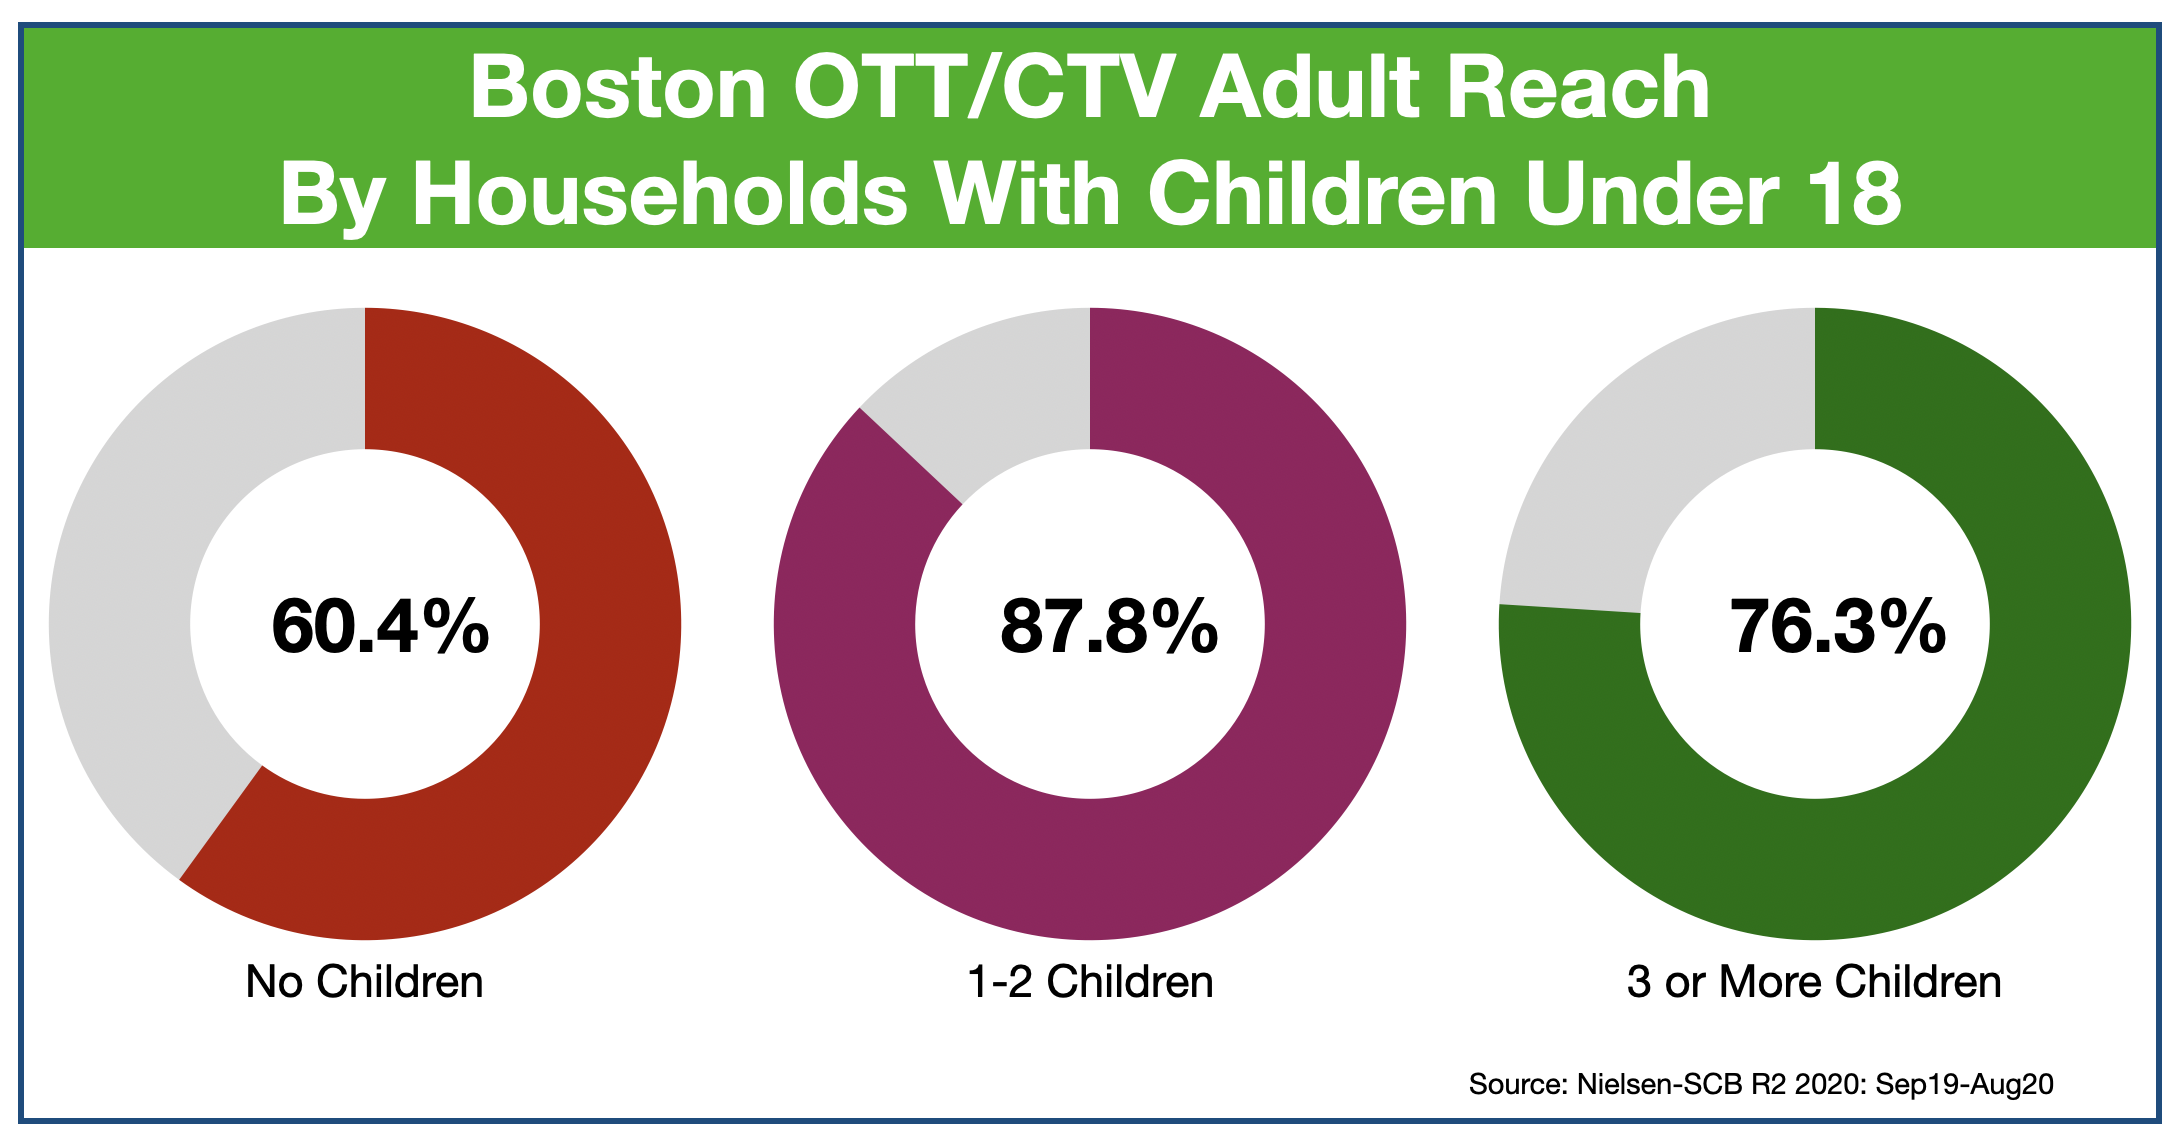 Advertising In Boston OTT & CTV by Parenting Status